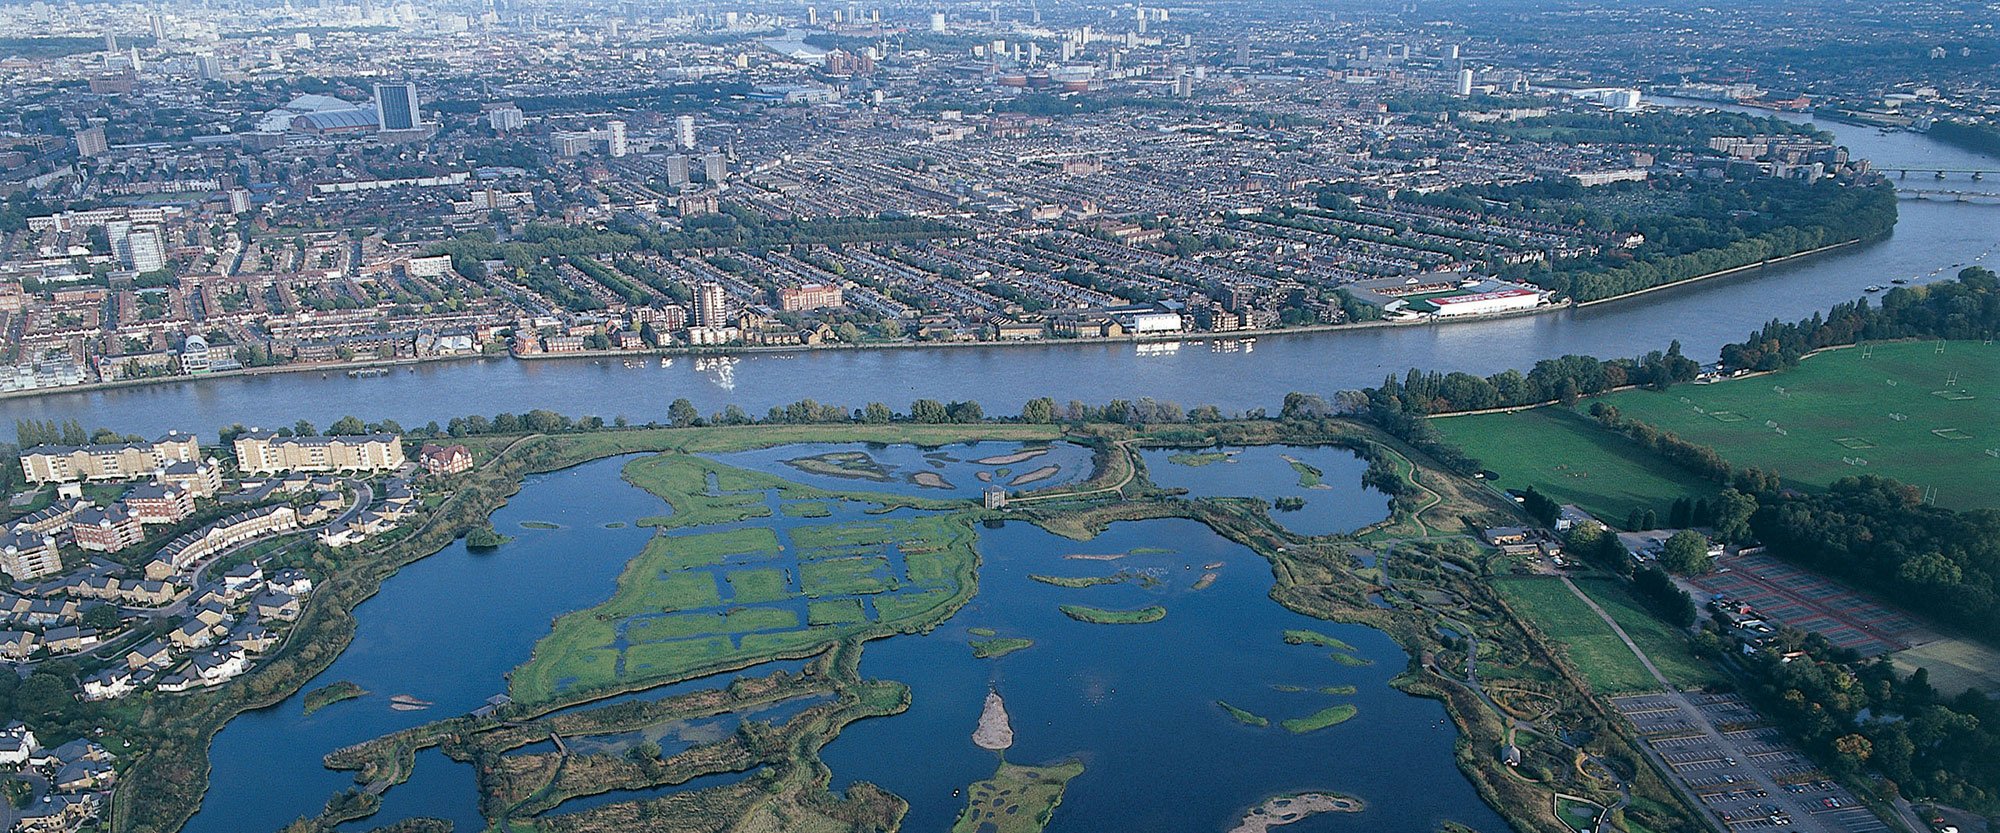 Urban wetland, London Wetland Centre